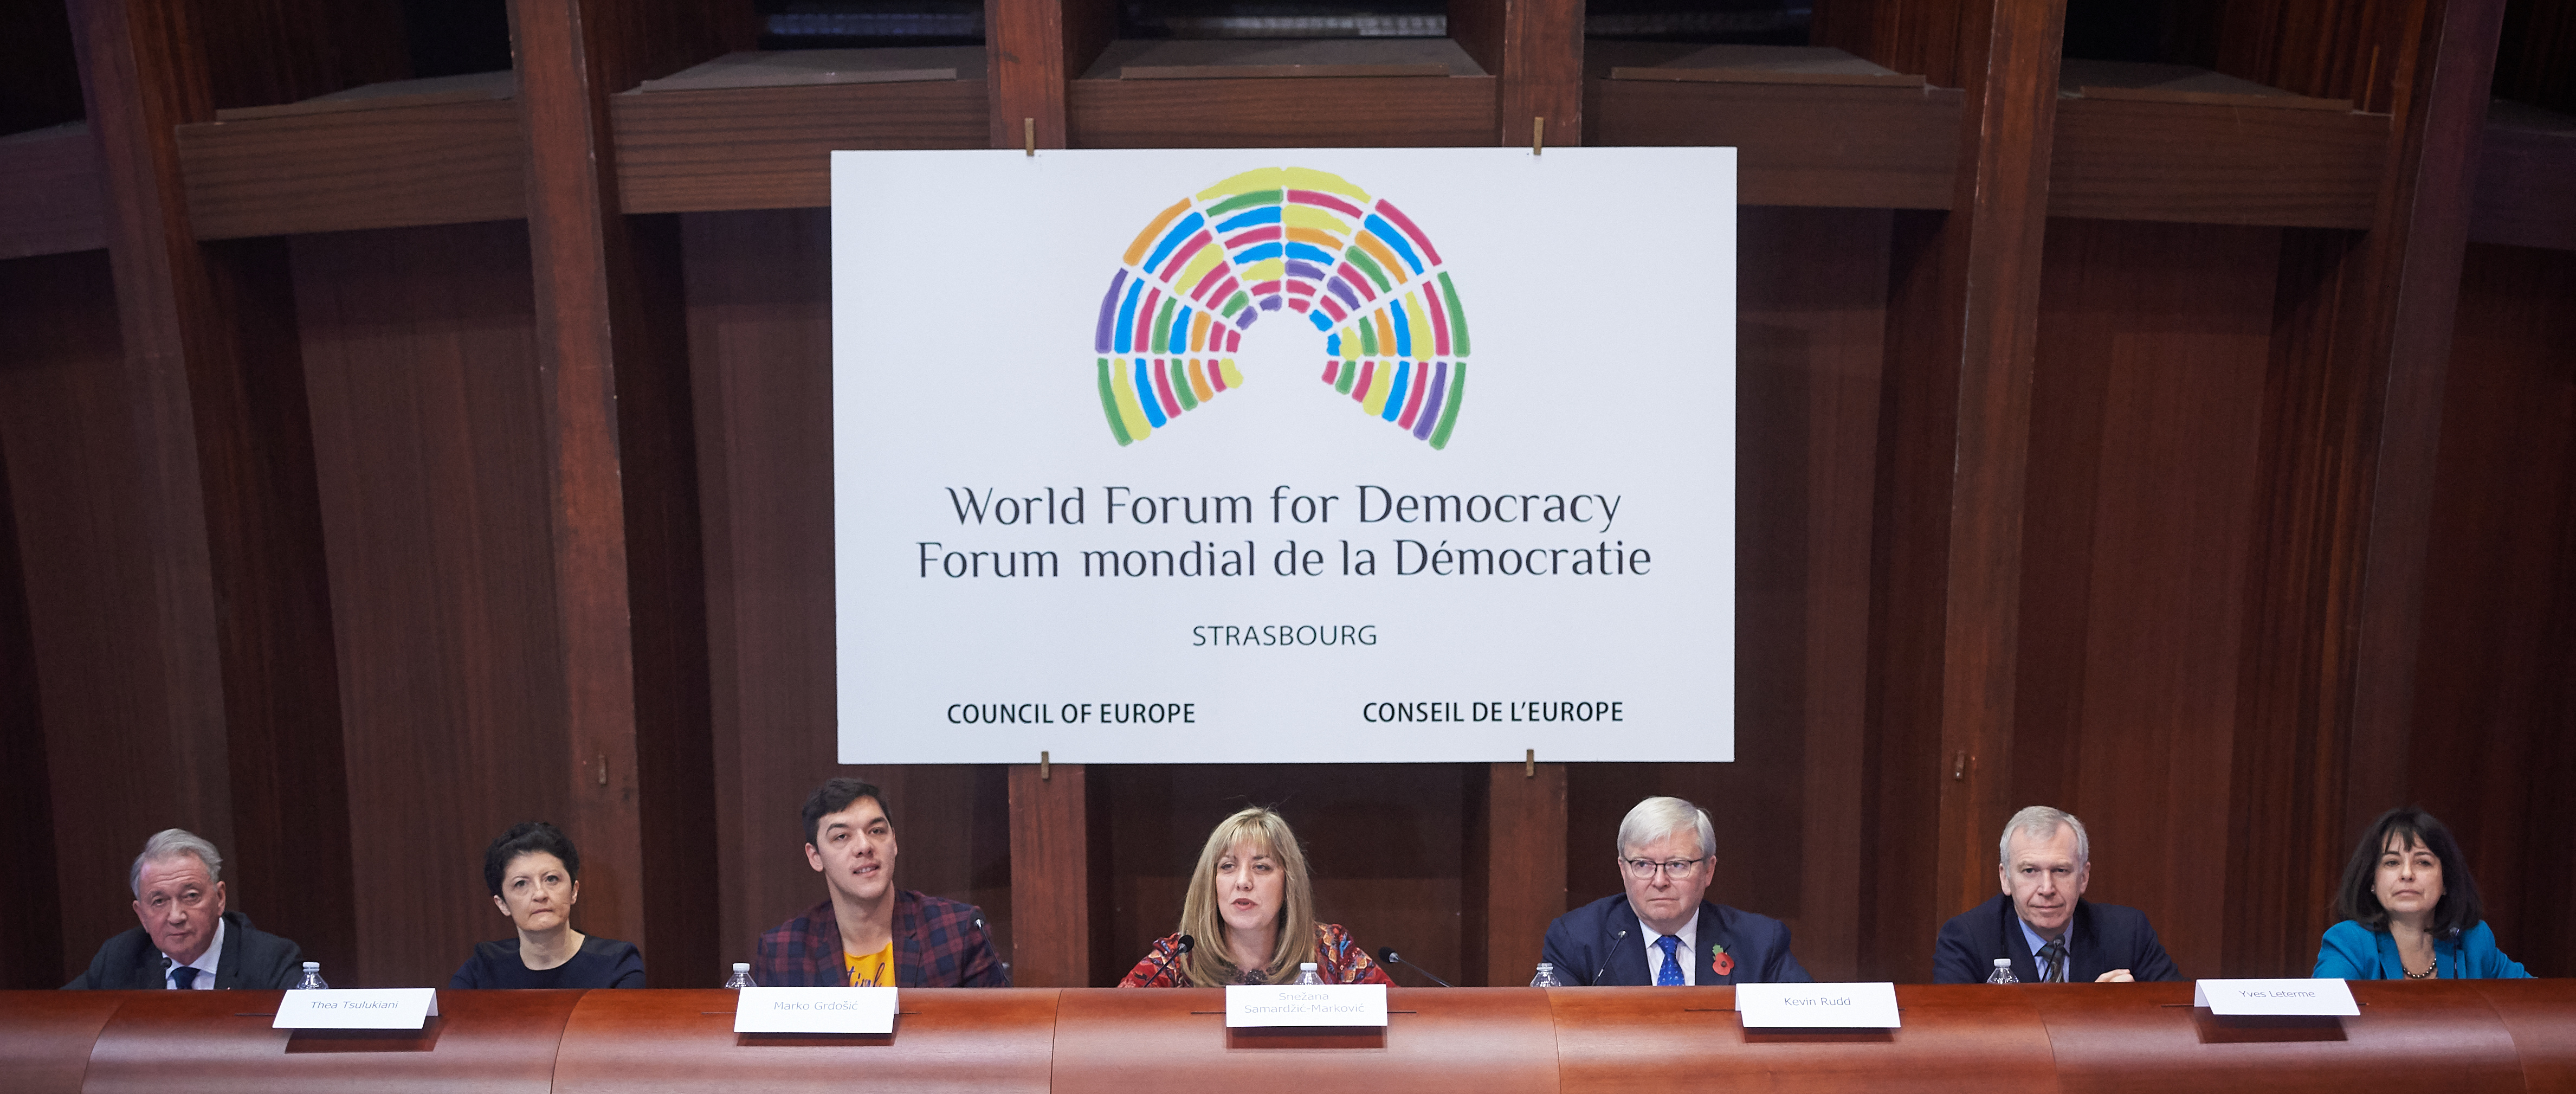 world forum for democracy 2017 application